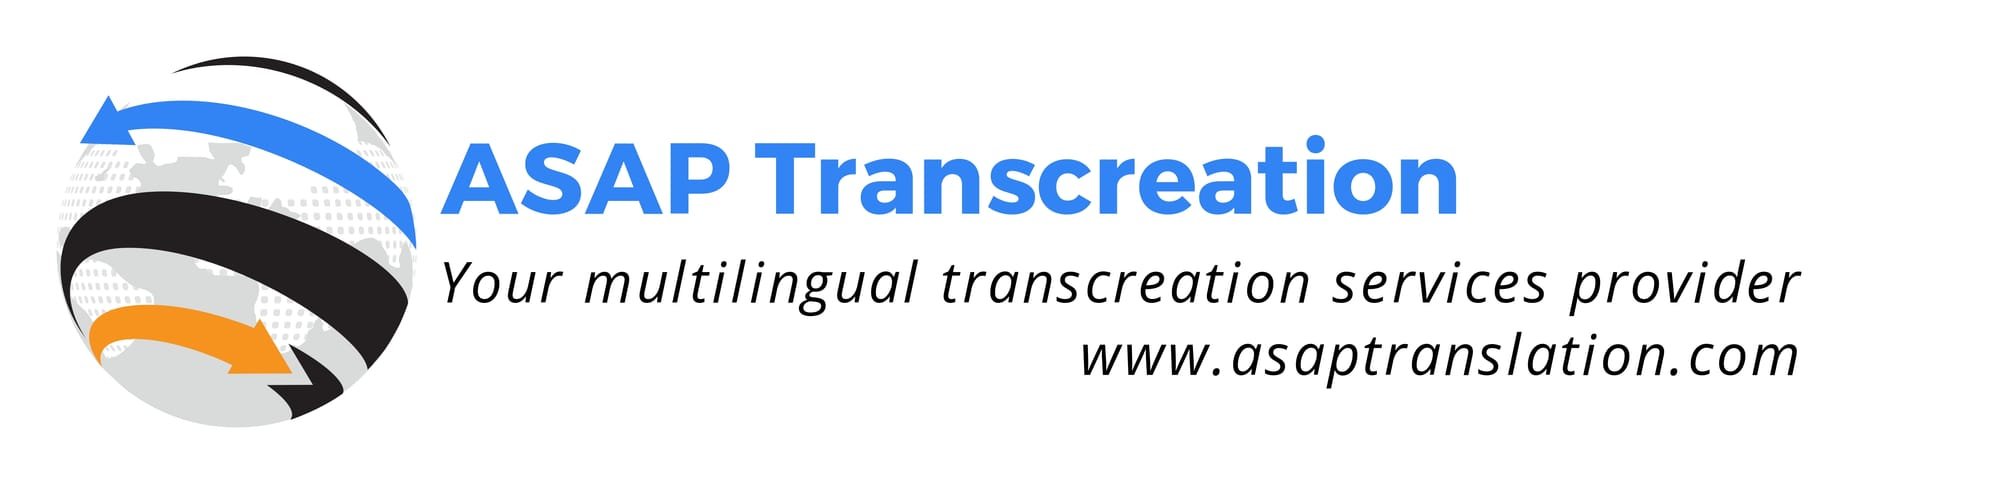 Transcreation Service